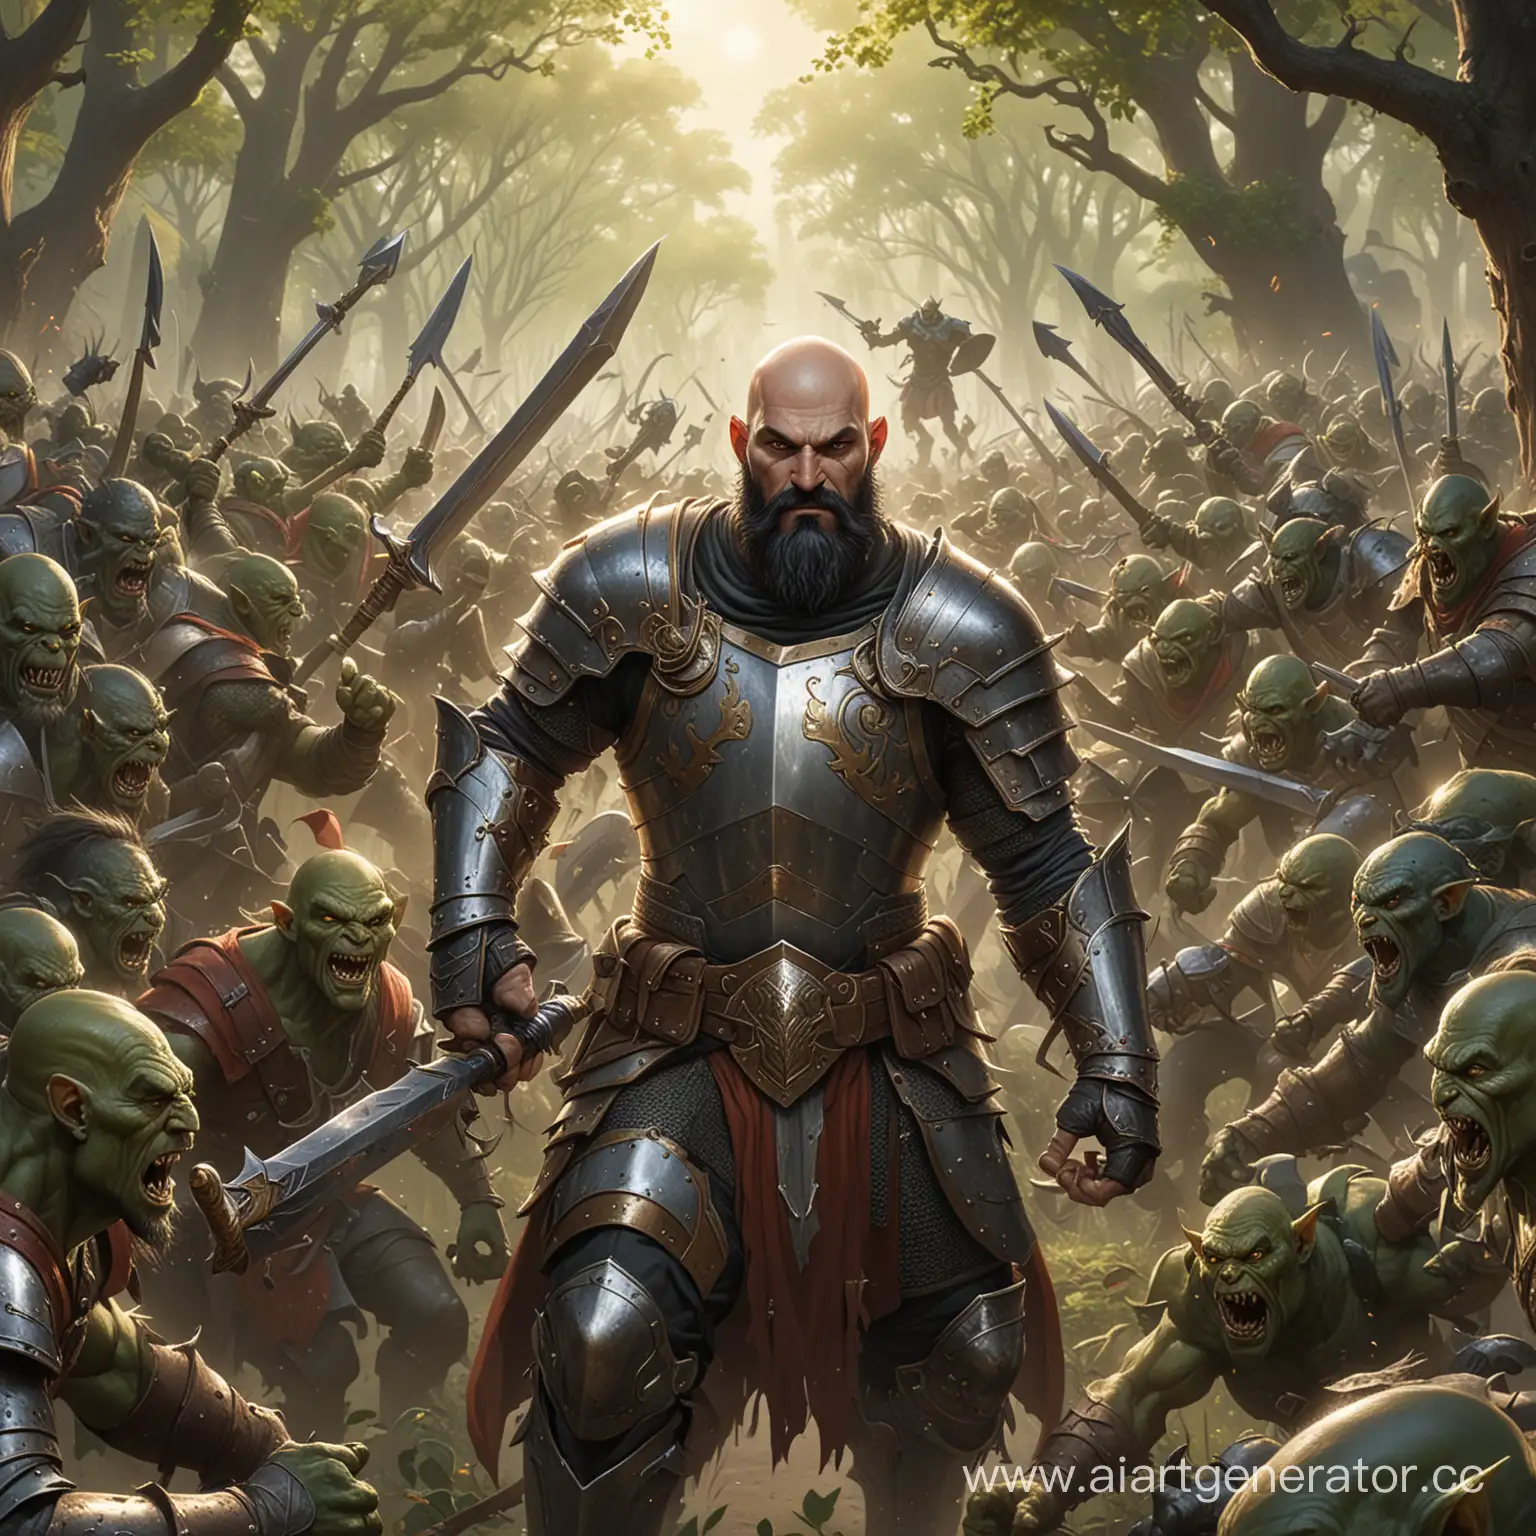 Bald-Paladin-Man-Battles-Green-Goblins-in-Shining-Armor